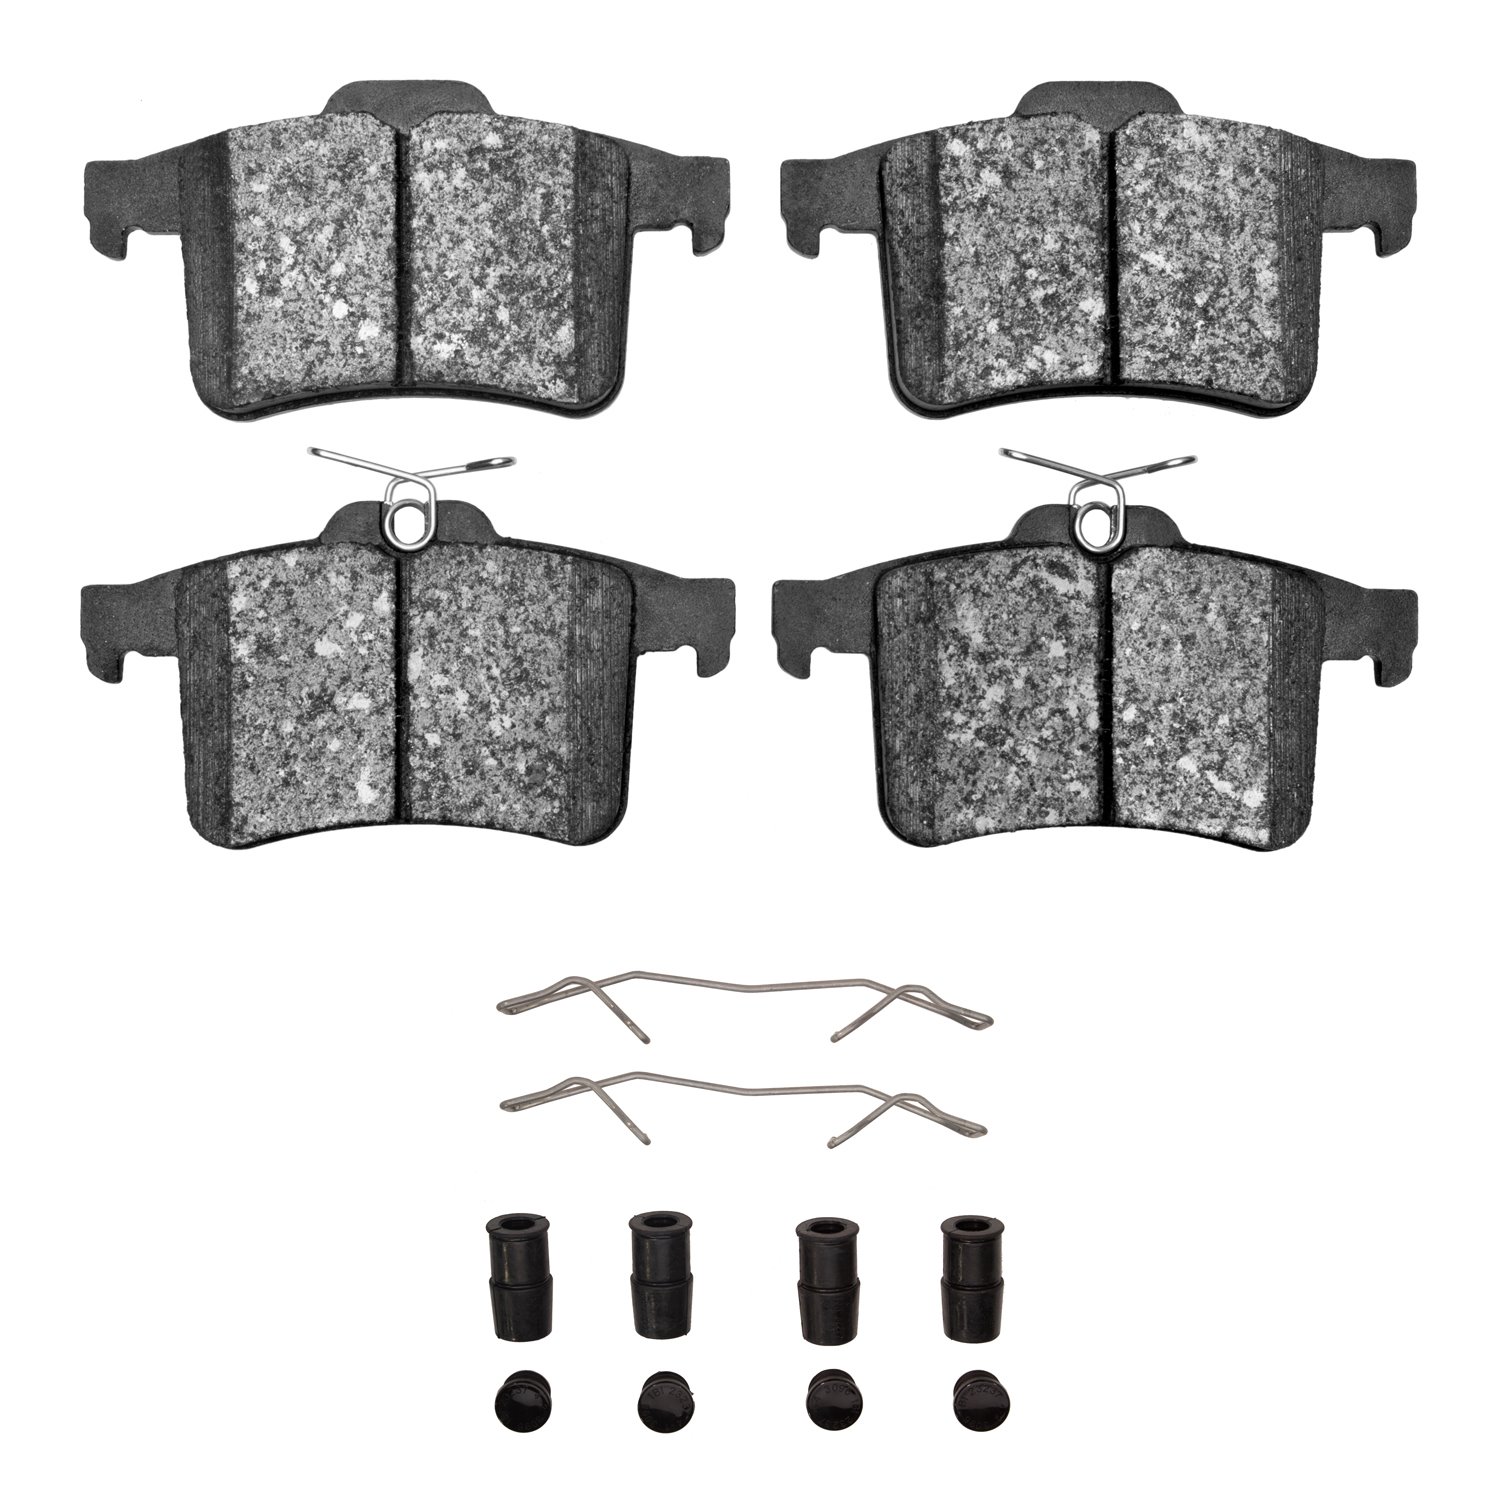 1600-1449-01 5000 Euro Ceramic Brake Pads & Hardware Kit, 2010-2018 Jaguar, Position: Rear